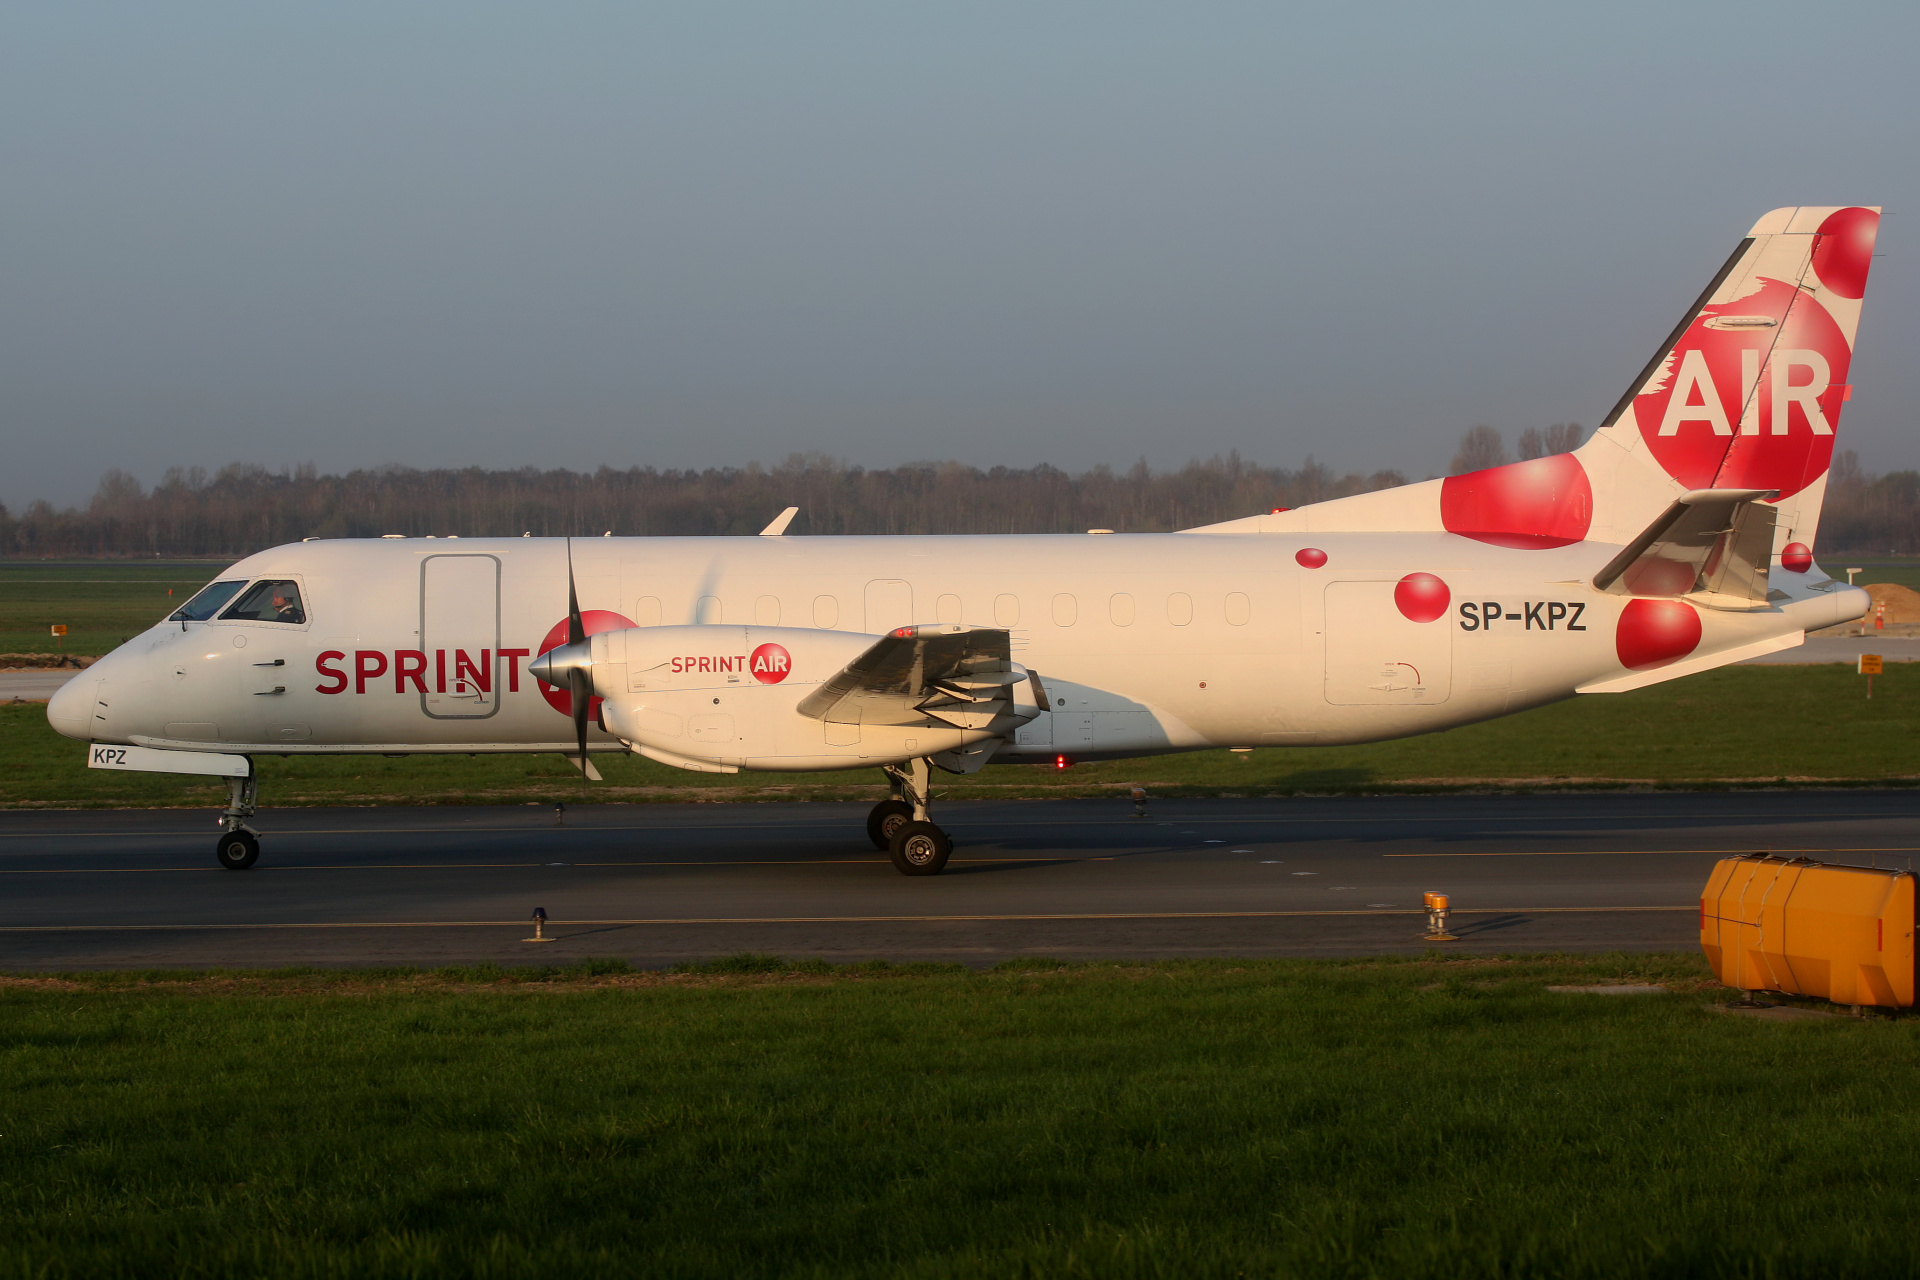 340AF, SP-KPZ (Samoloty » Spotting na EPWA » Saab 340 » 340A » SprintAir)